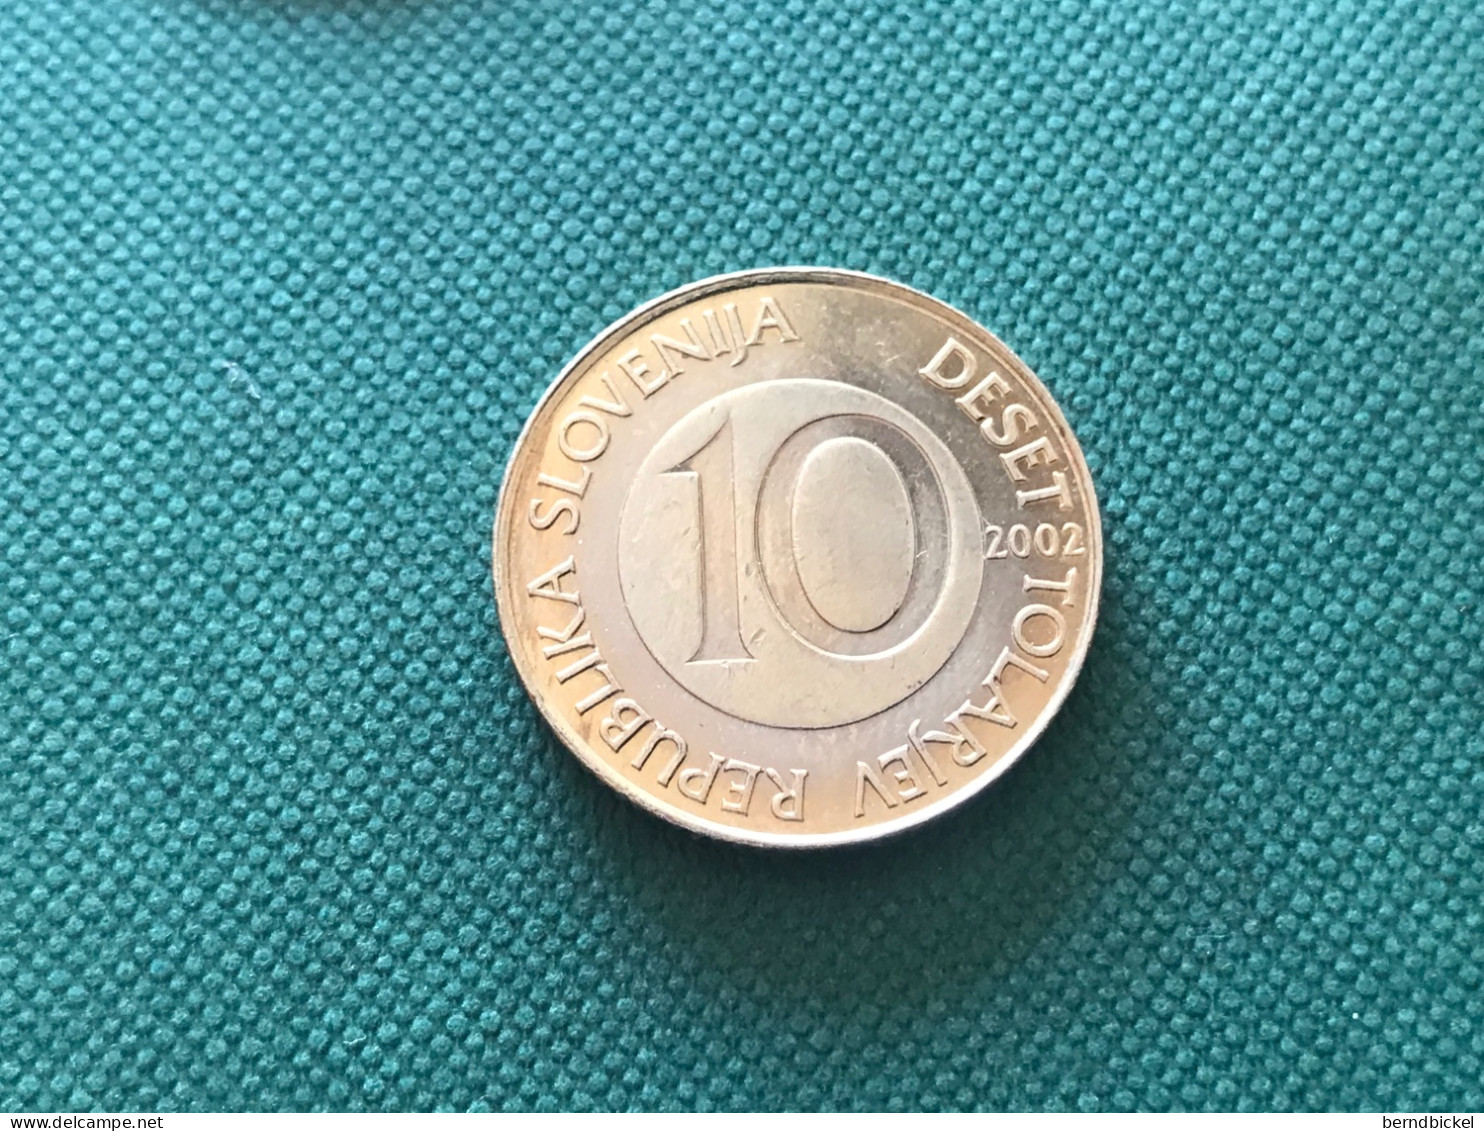 Münzen Münze Umlaufmünze Slowenien 10 Tolar 2002 - Slovenia